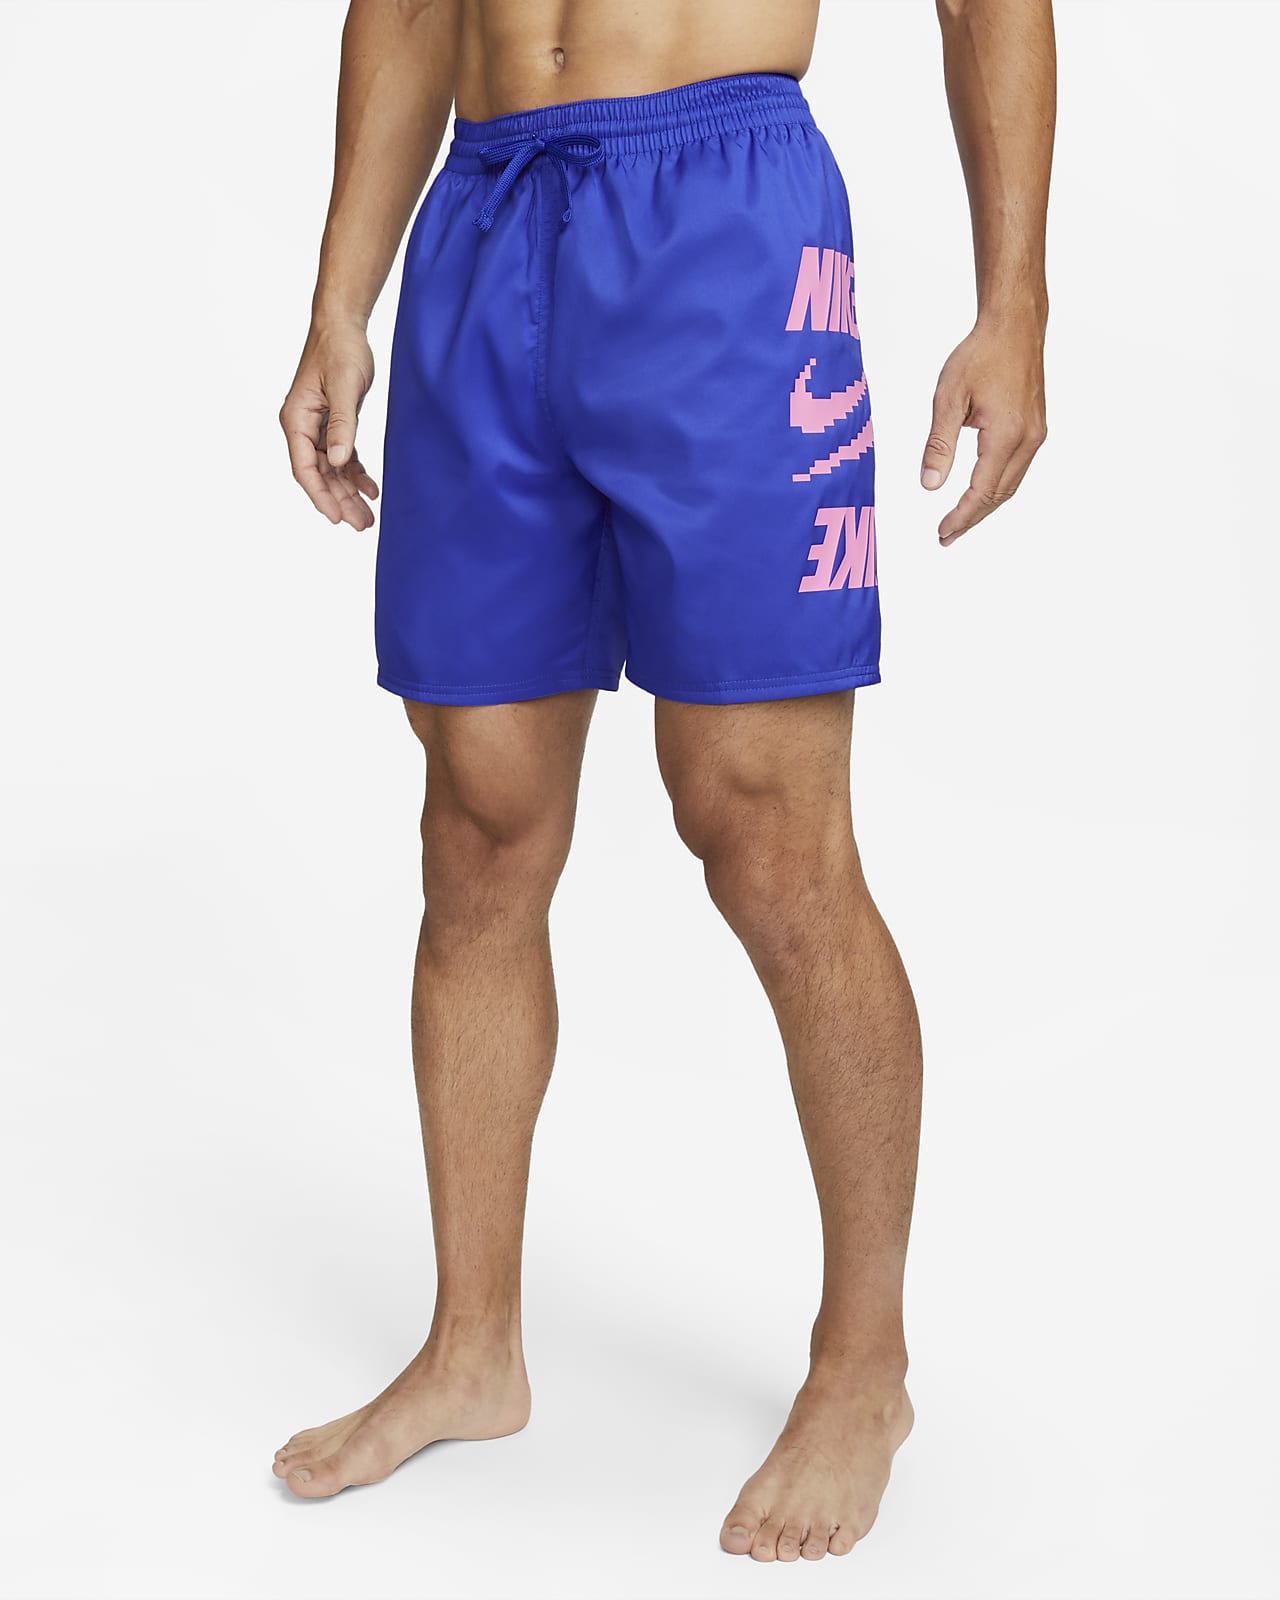 Nike Men's 7 Volley Shorts.